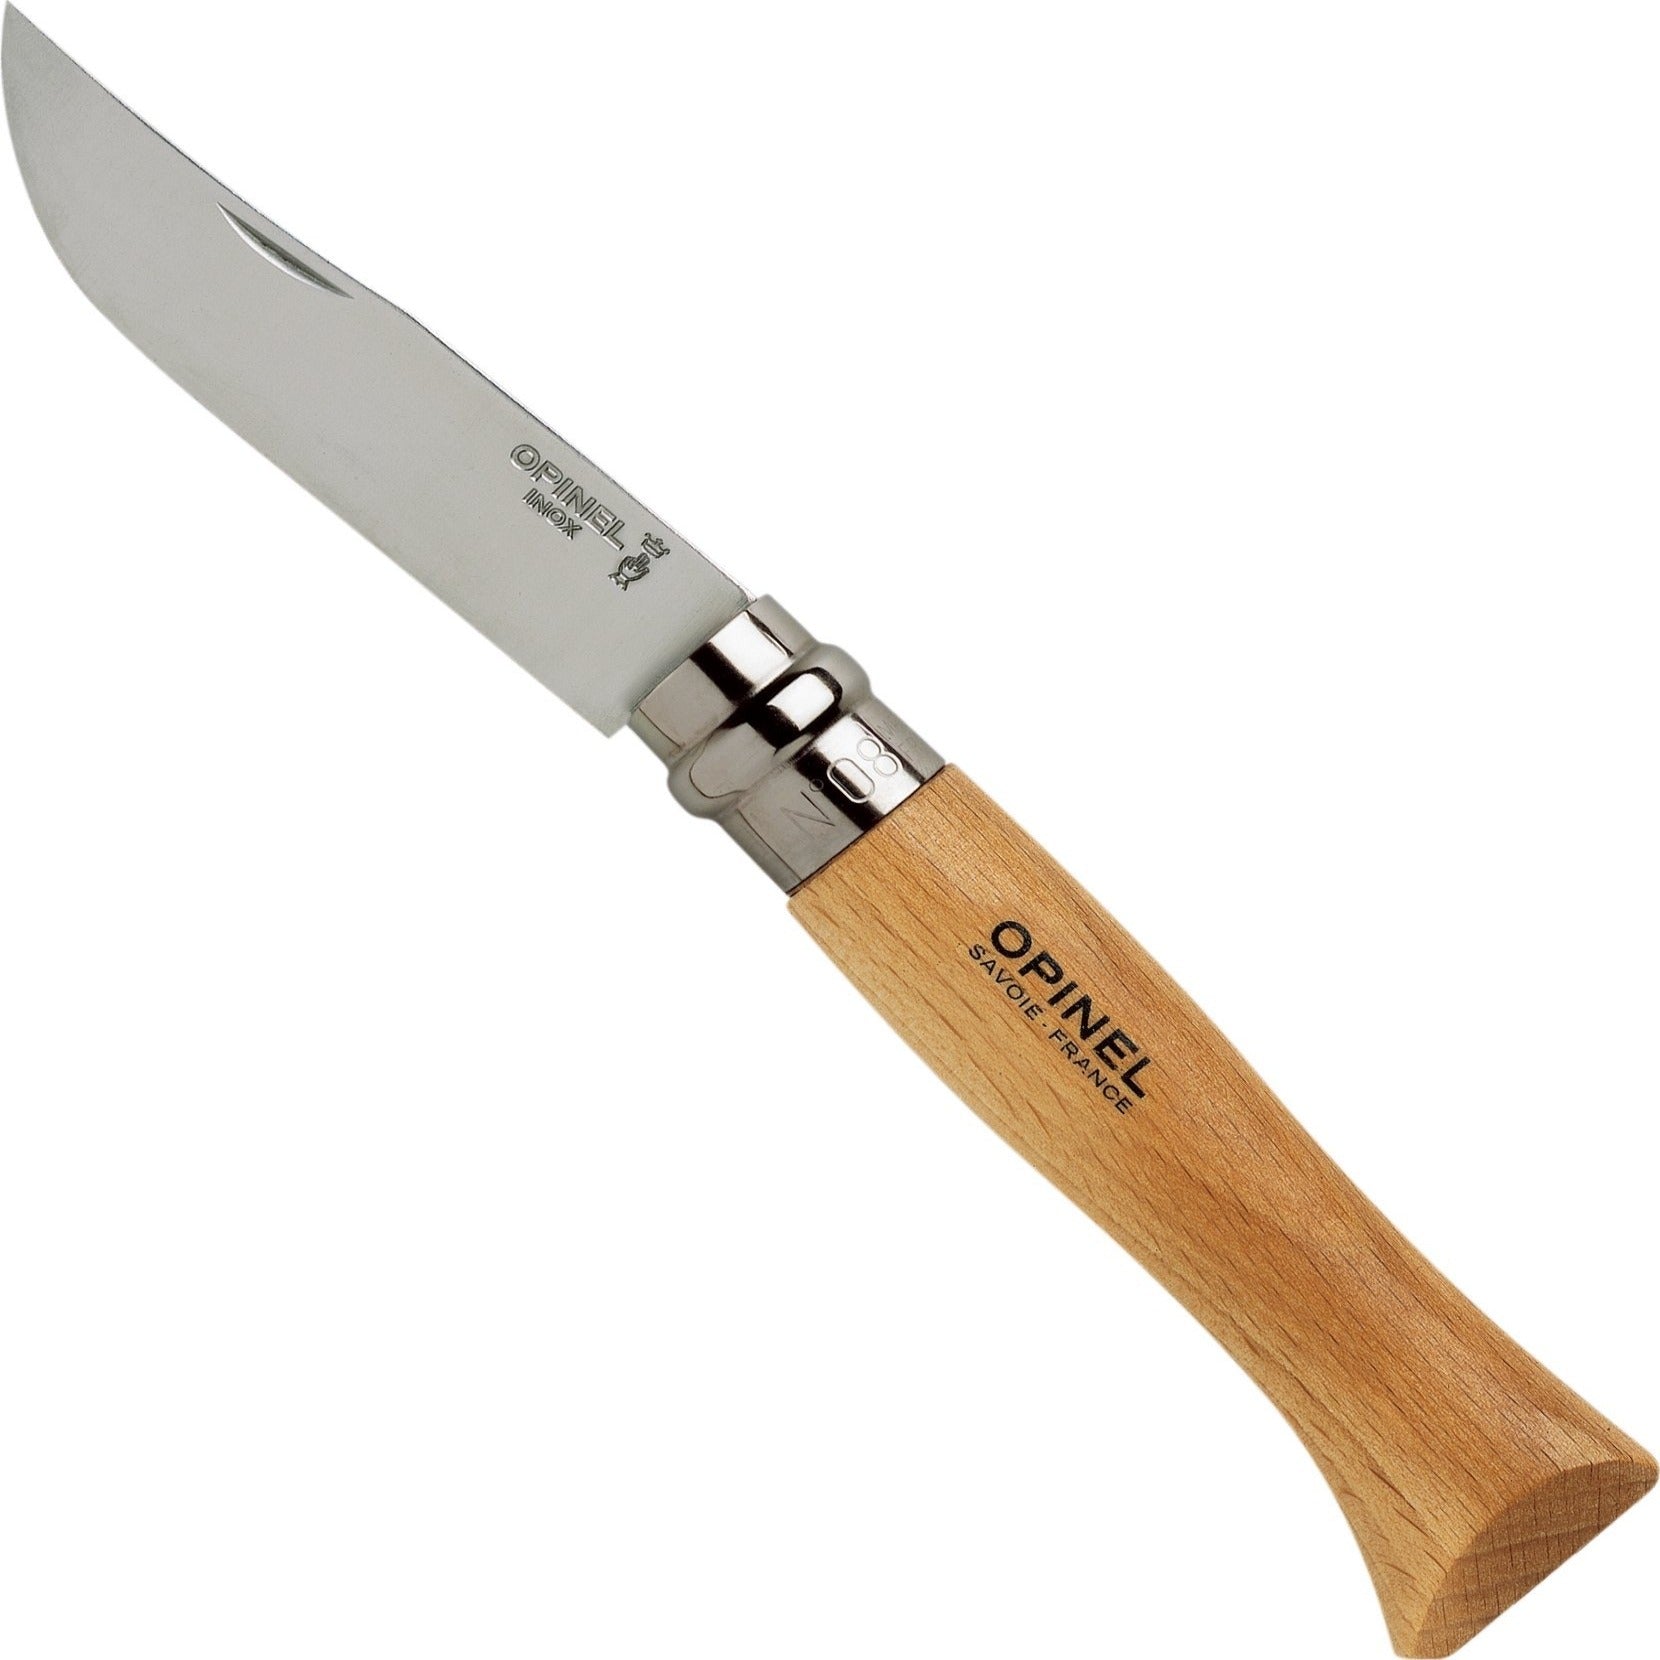 Opinel No08 Stainless Steel Folding Knife + Sheath